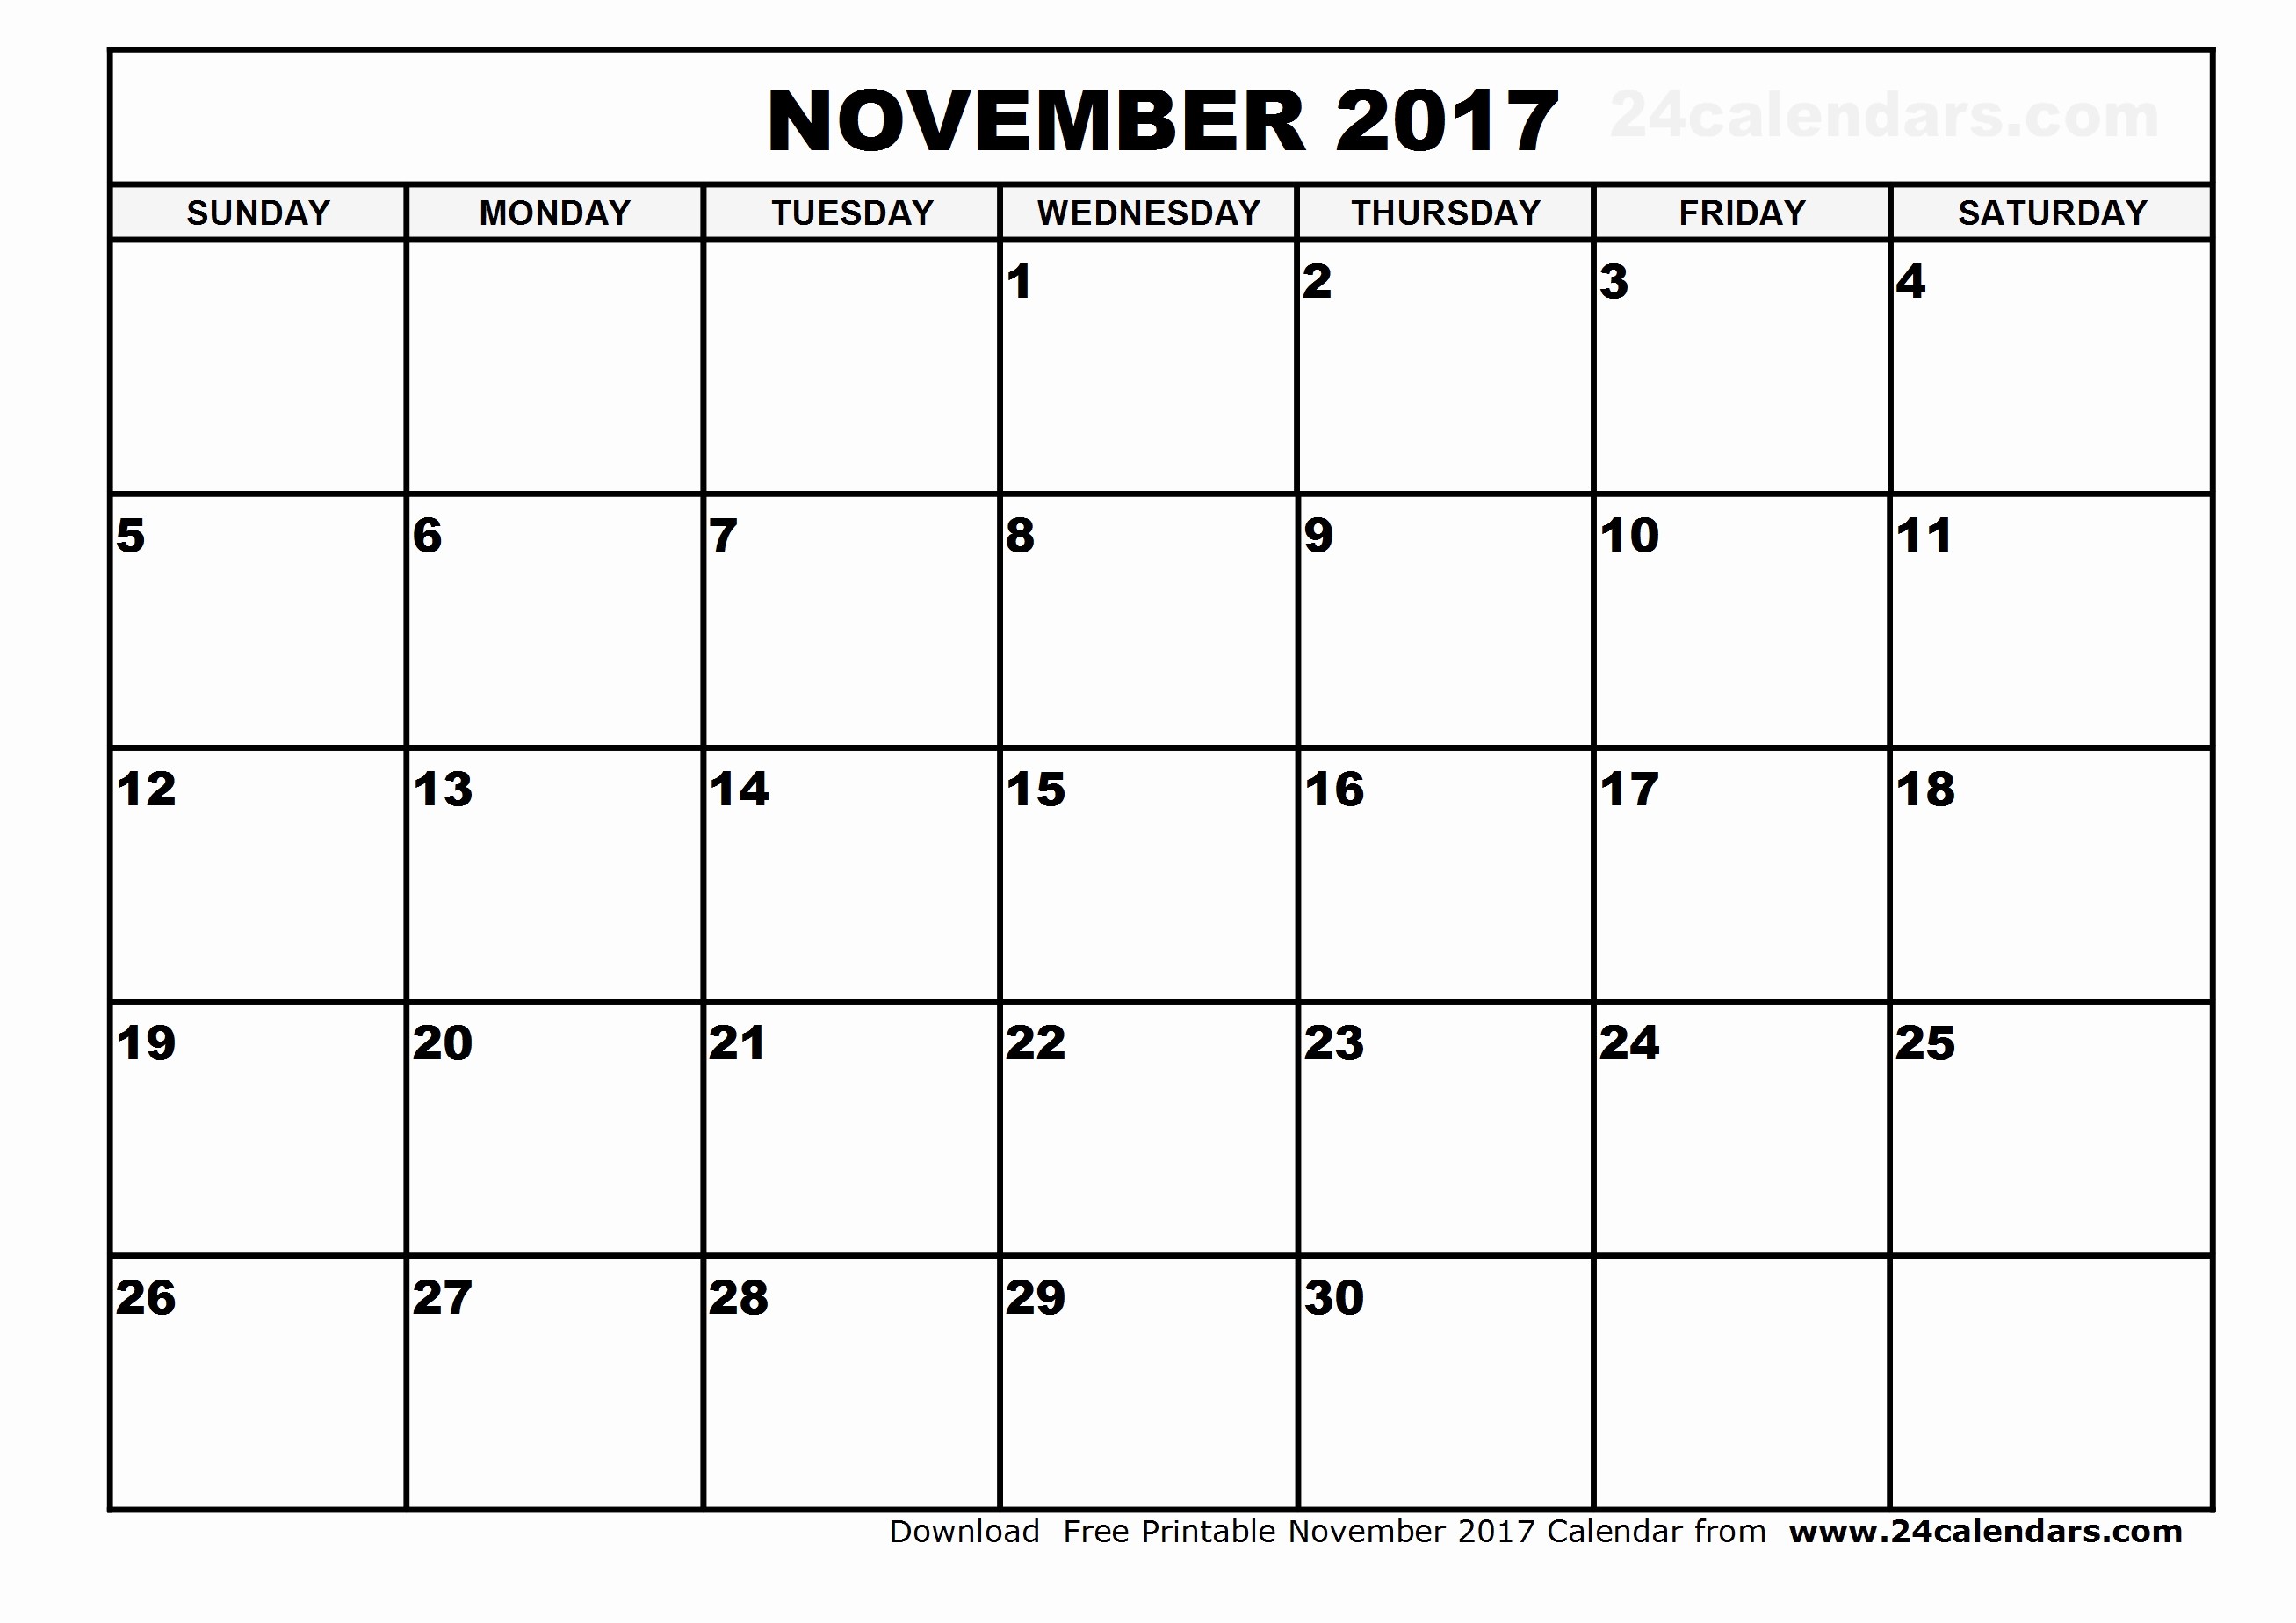 Blank November 2017 Calendar Template New Blank November 2017 Calendar